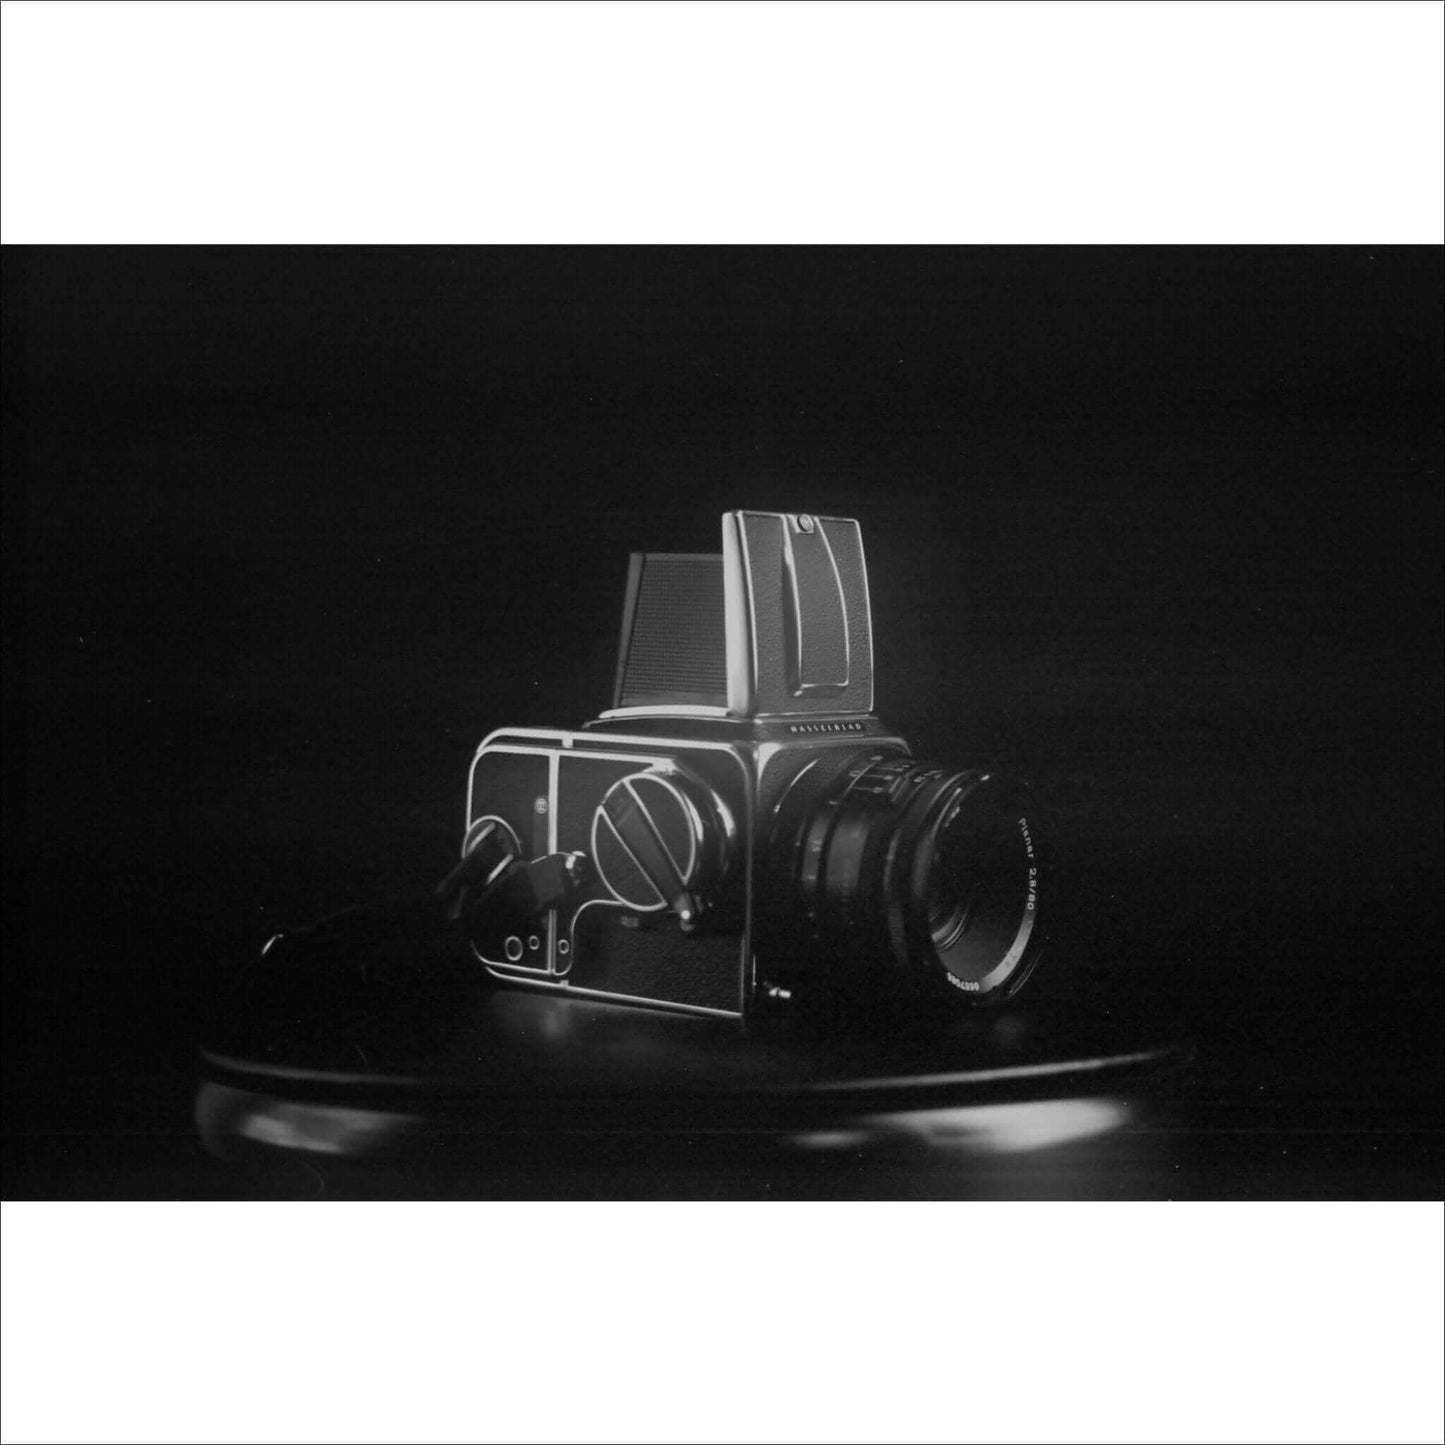 Ferrania P30 80 Iso Black And White 35mm 36 Exp Film